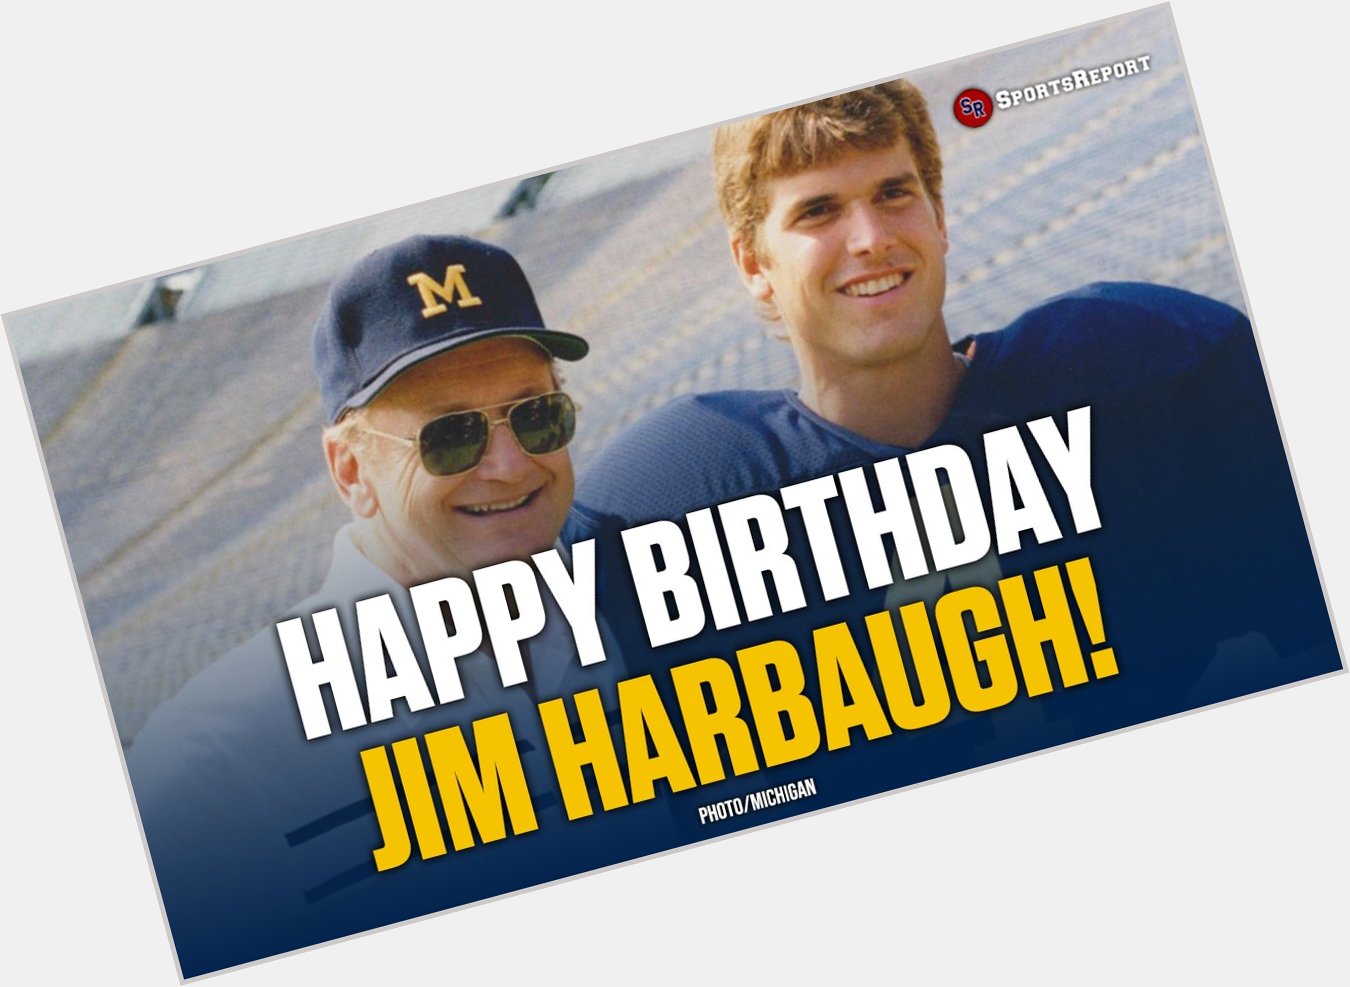  Fans, let\s wish Jim Harbaugh a Happy Birthday! 